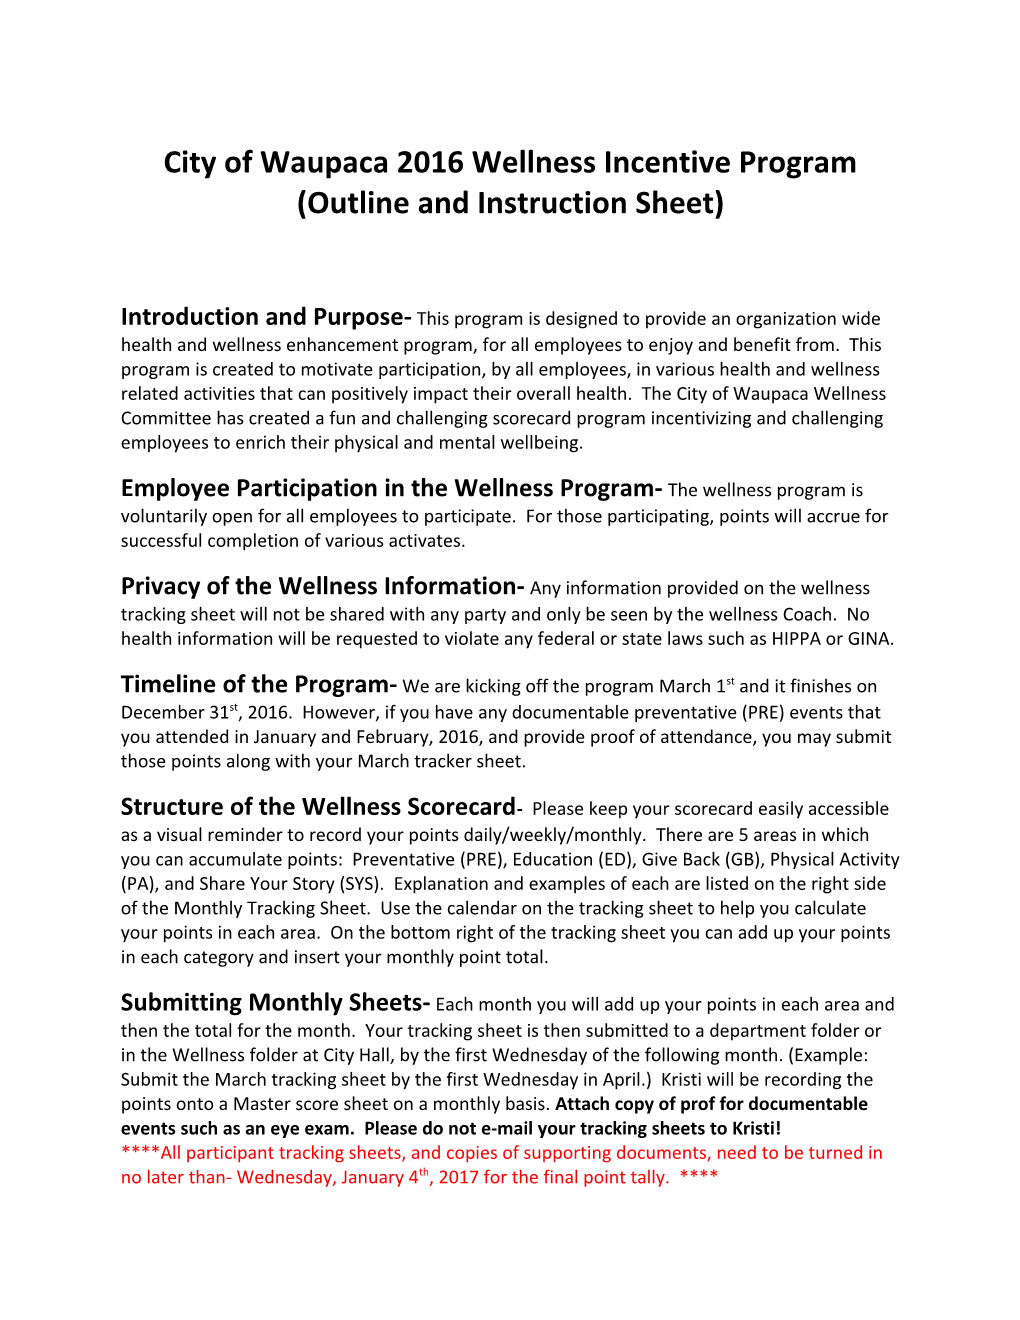 City of Waupaca 2016 Wellness Incentive Program (Outline and Instruction Sheet)